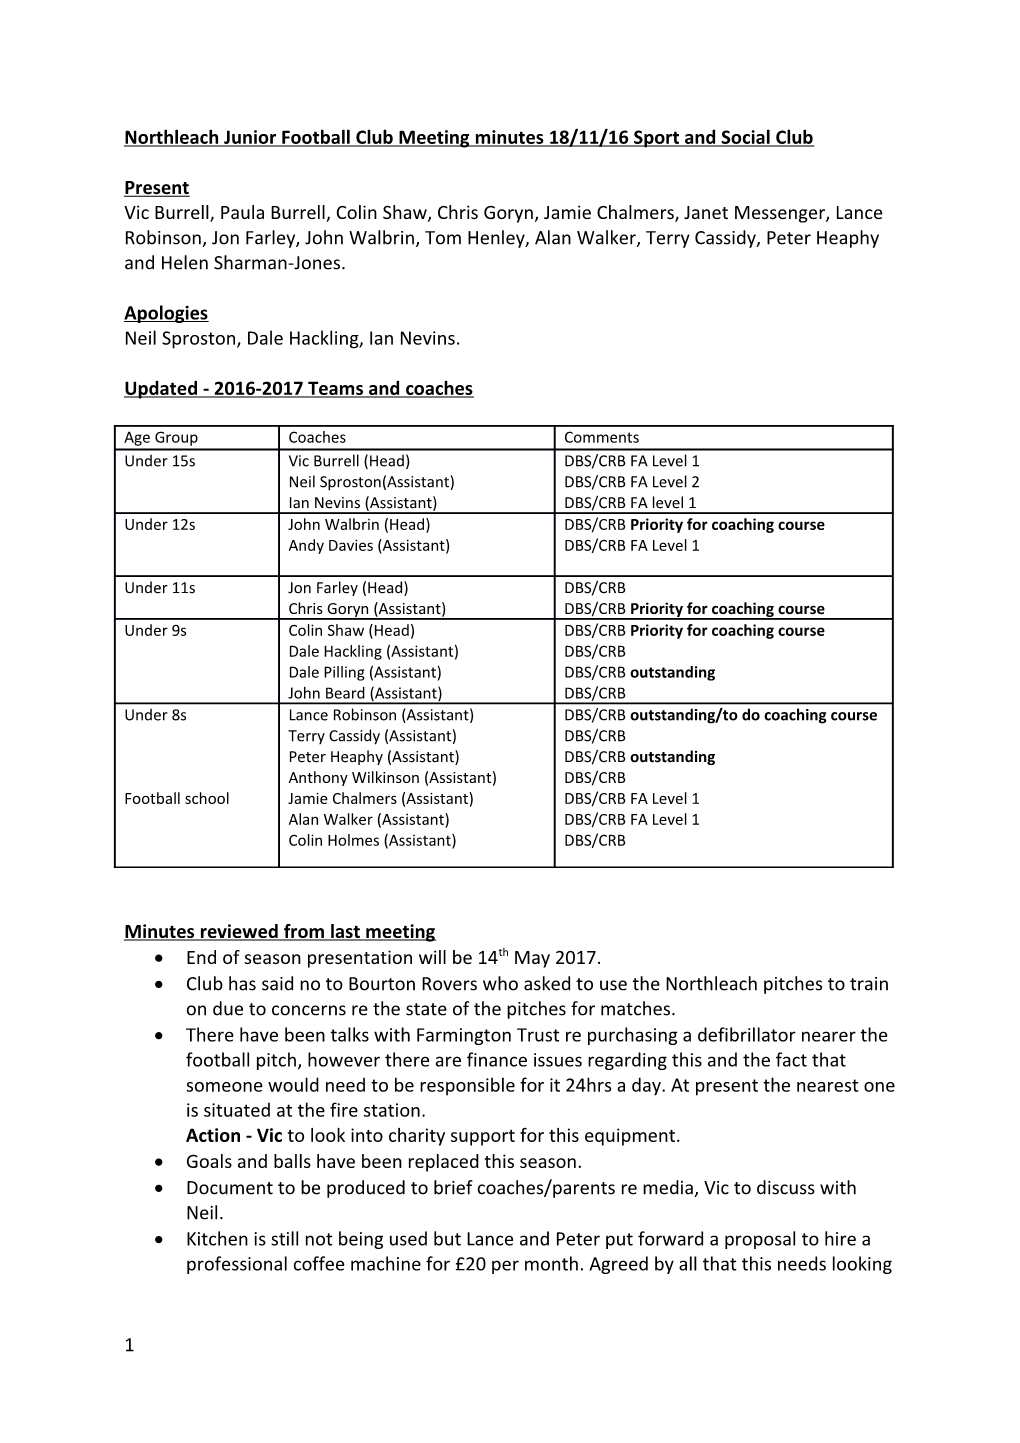 Northleach Junior Football Club Meeting Minutes 18/11/16 Sport and Social Club